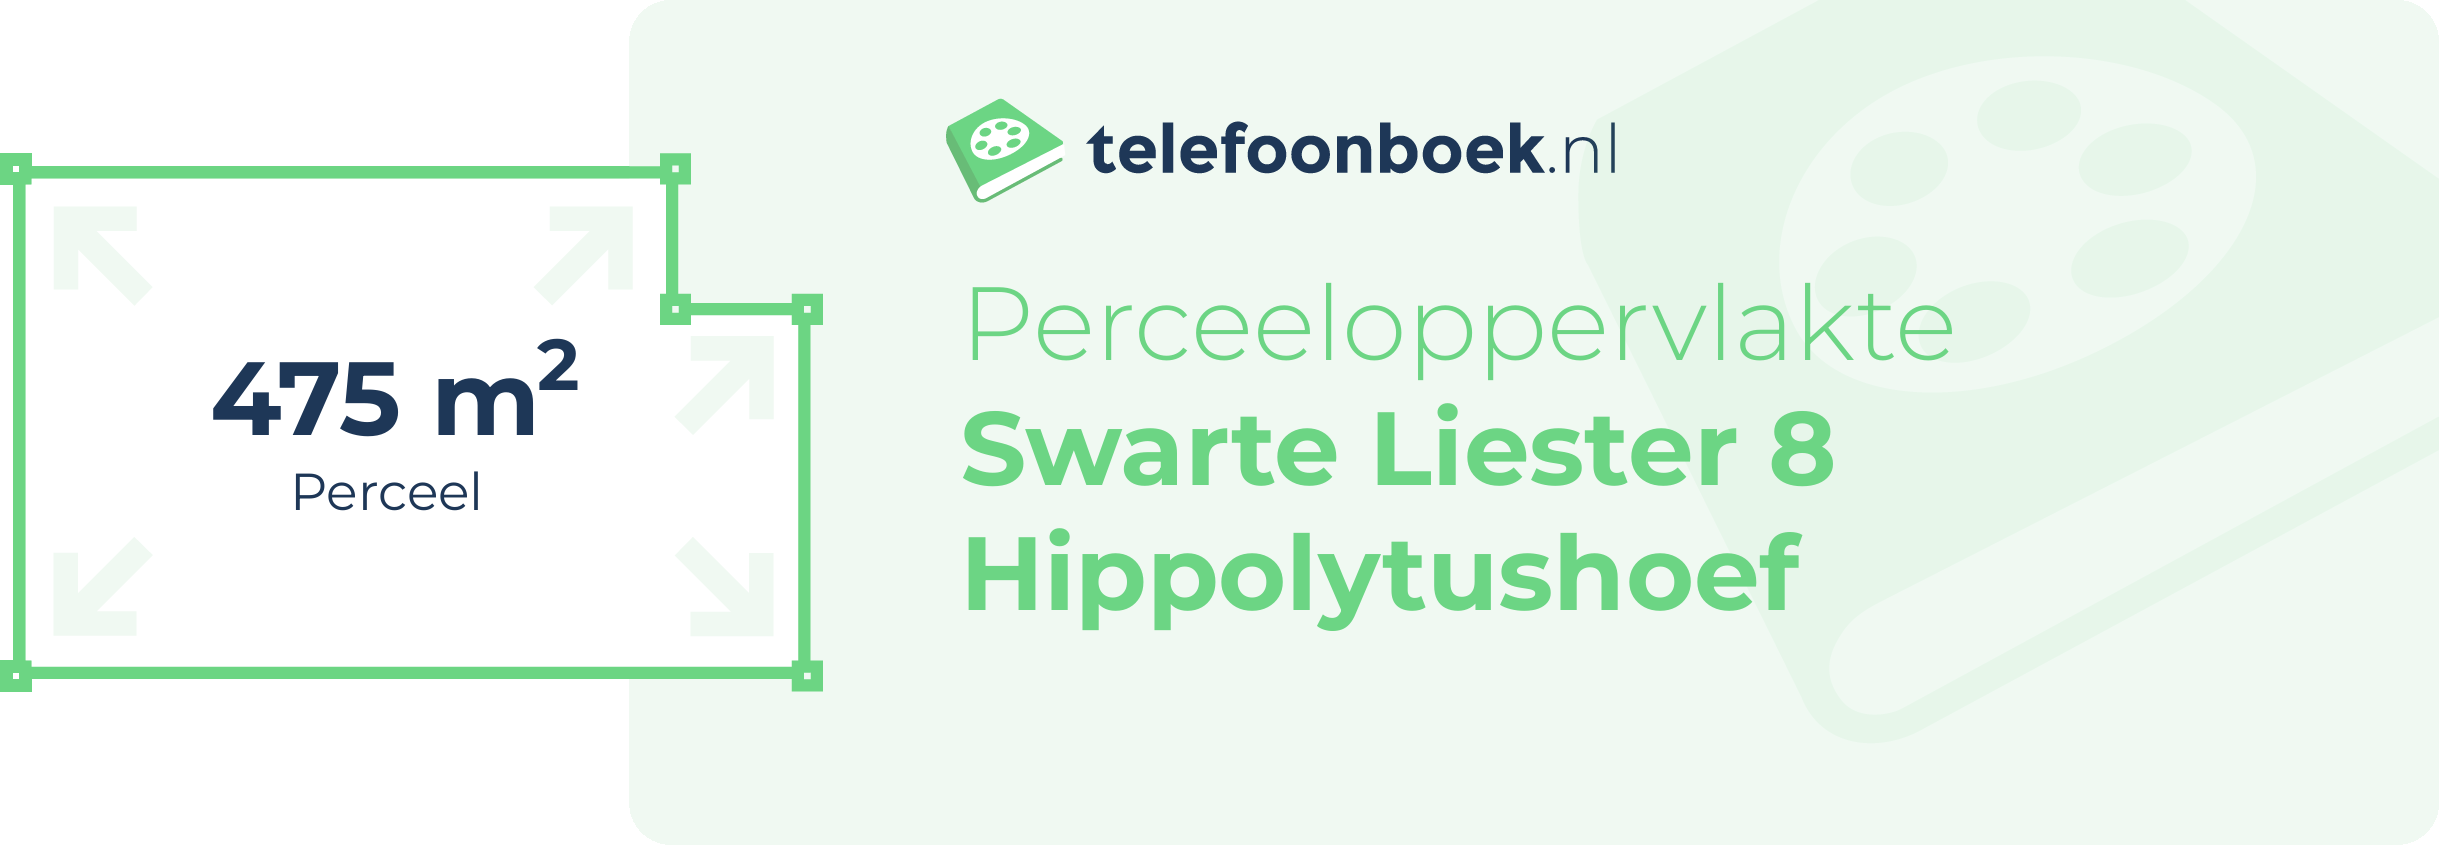 Perceeloppervlakte Swarte Liester 8 Hippolytushoef